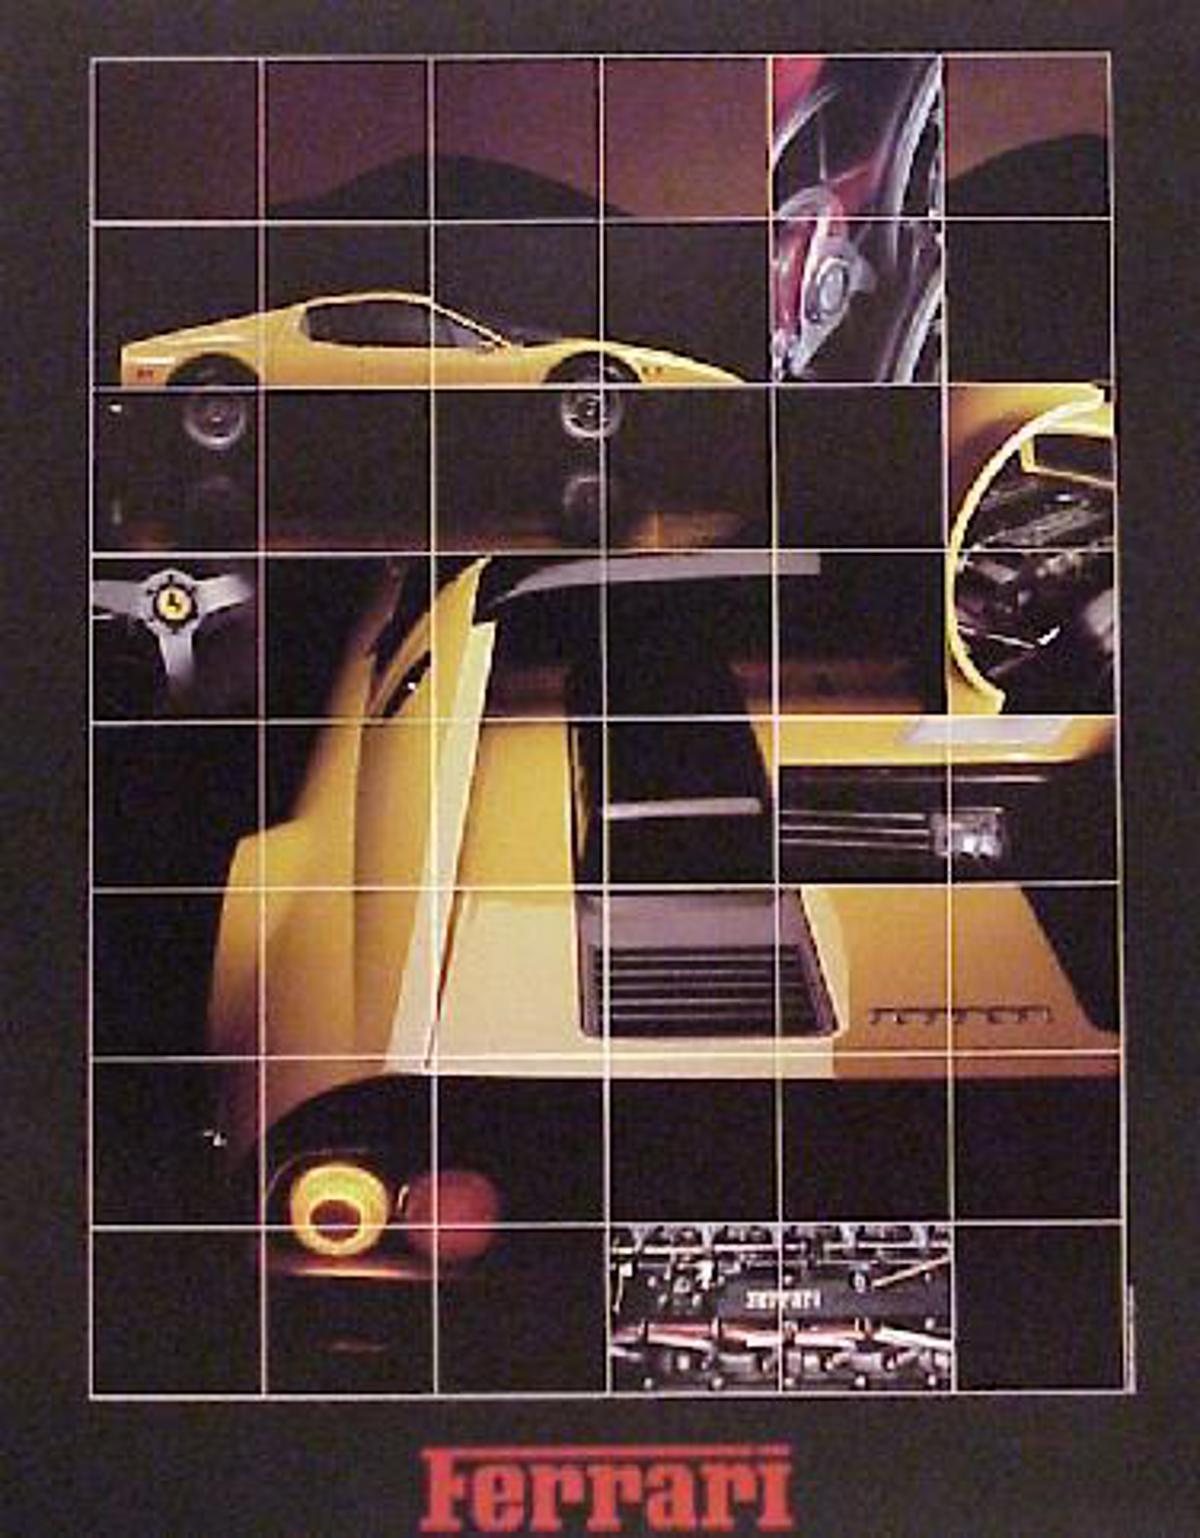 Ferrari 512 BBi collage poster